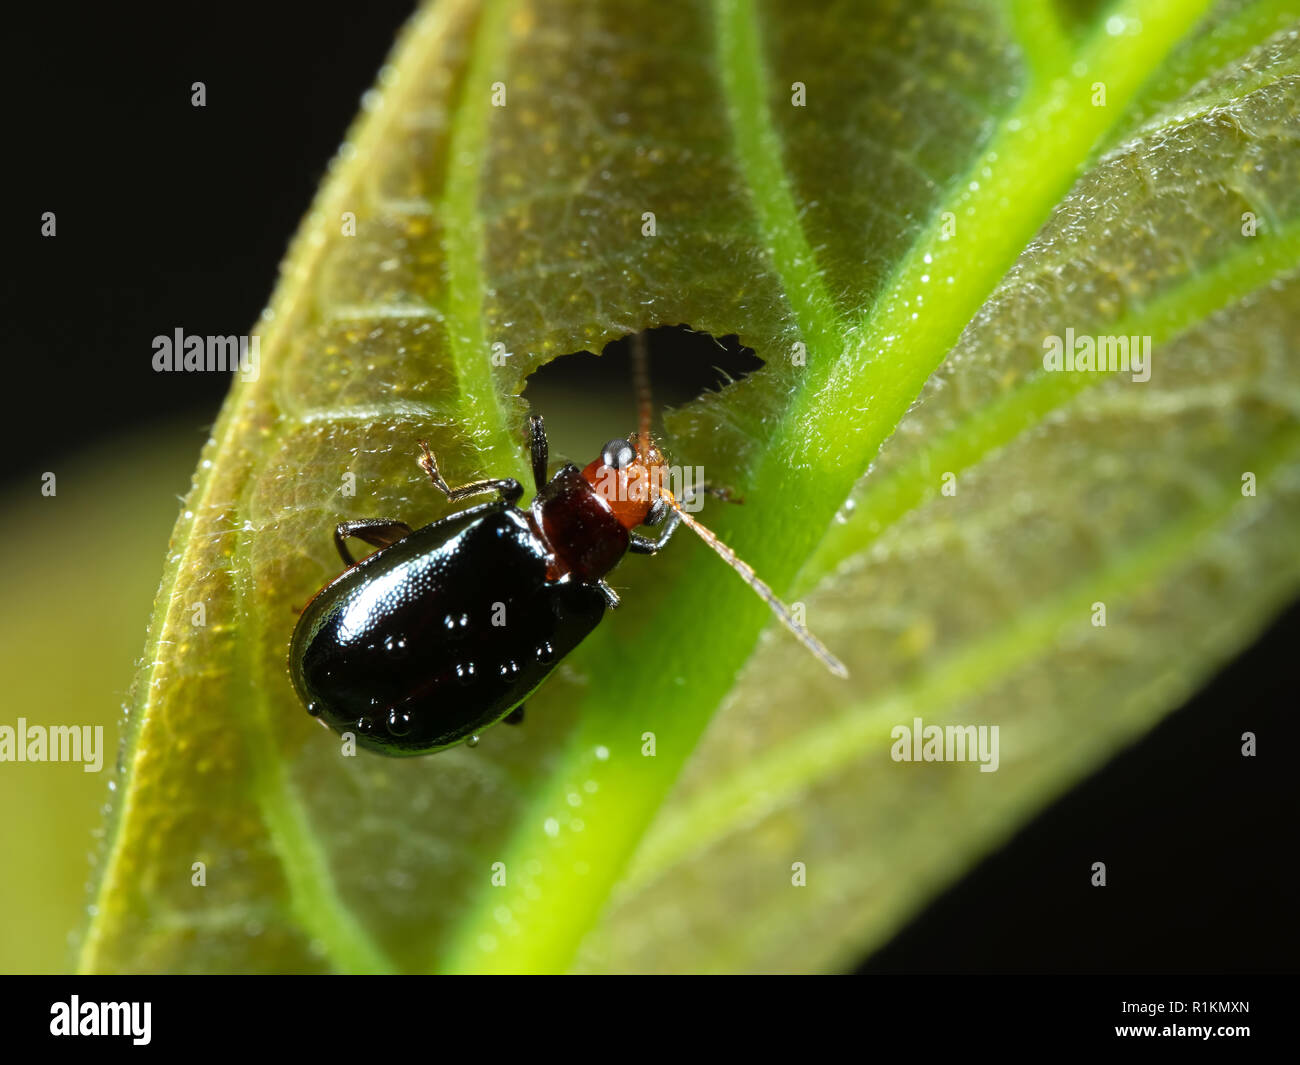 Macro Photography of Orange and Black Beetle Eating a Leaf Stock Photo